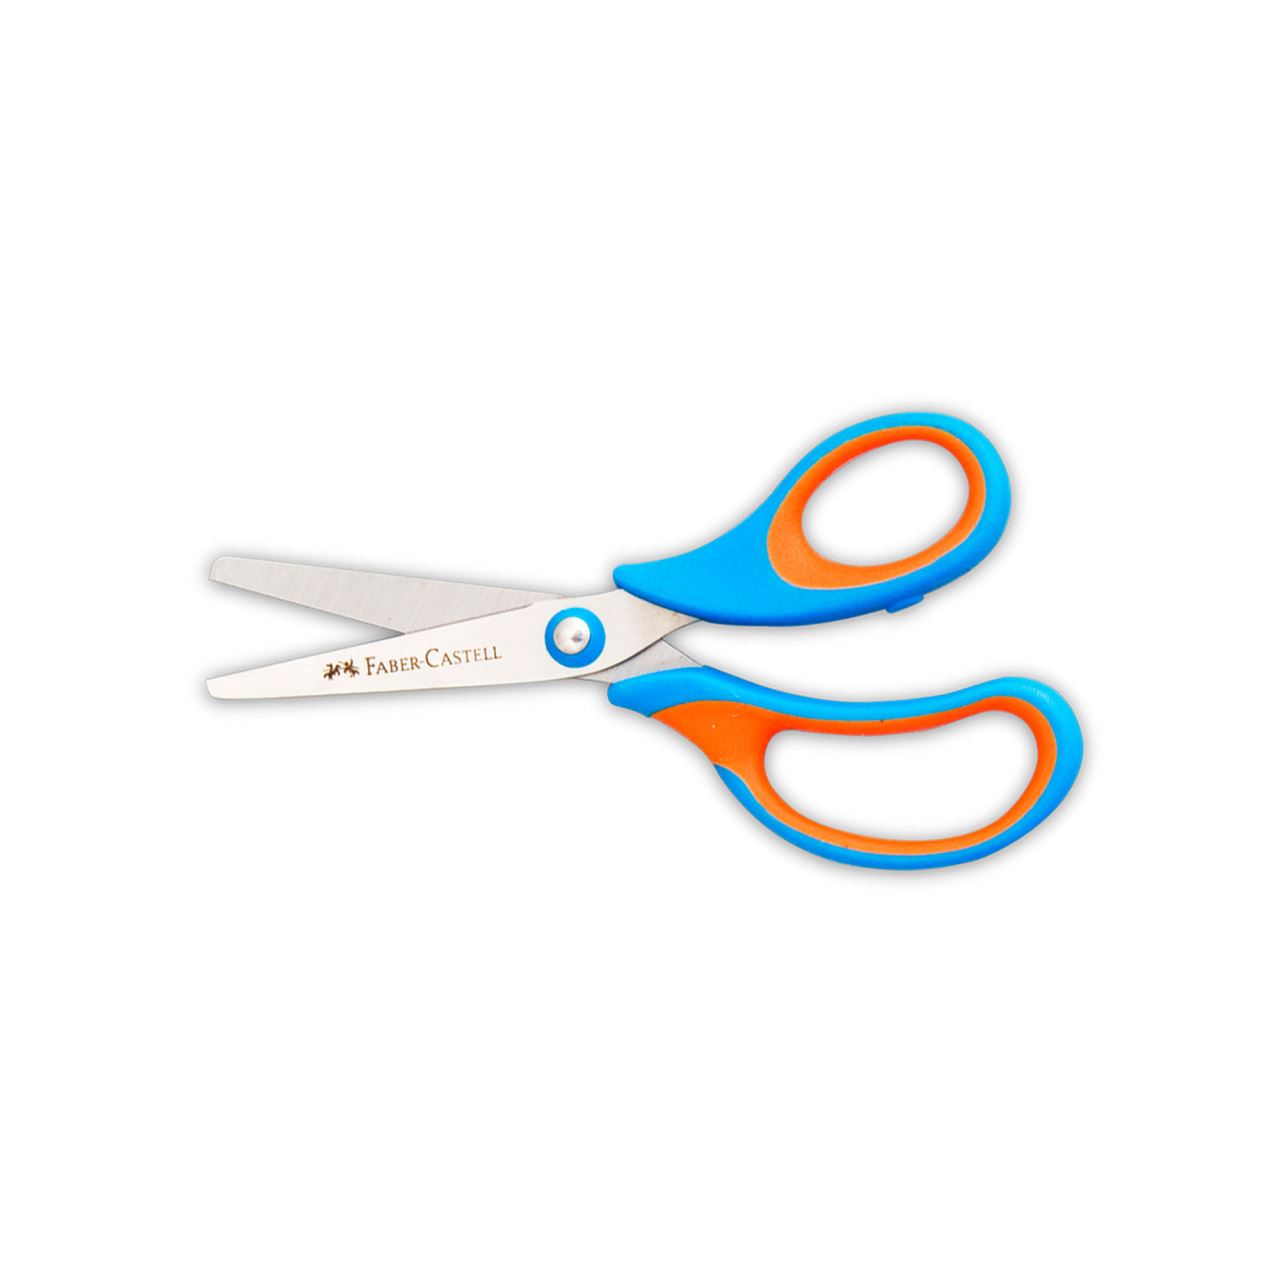 Faber-Castell - School scissors Soft Touch 13cm